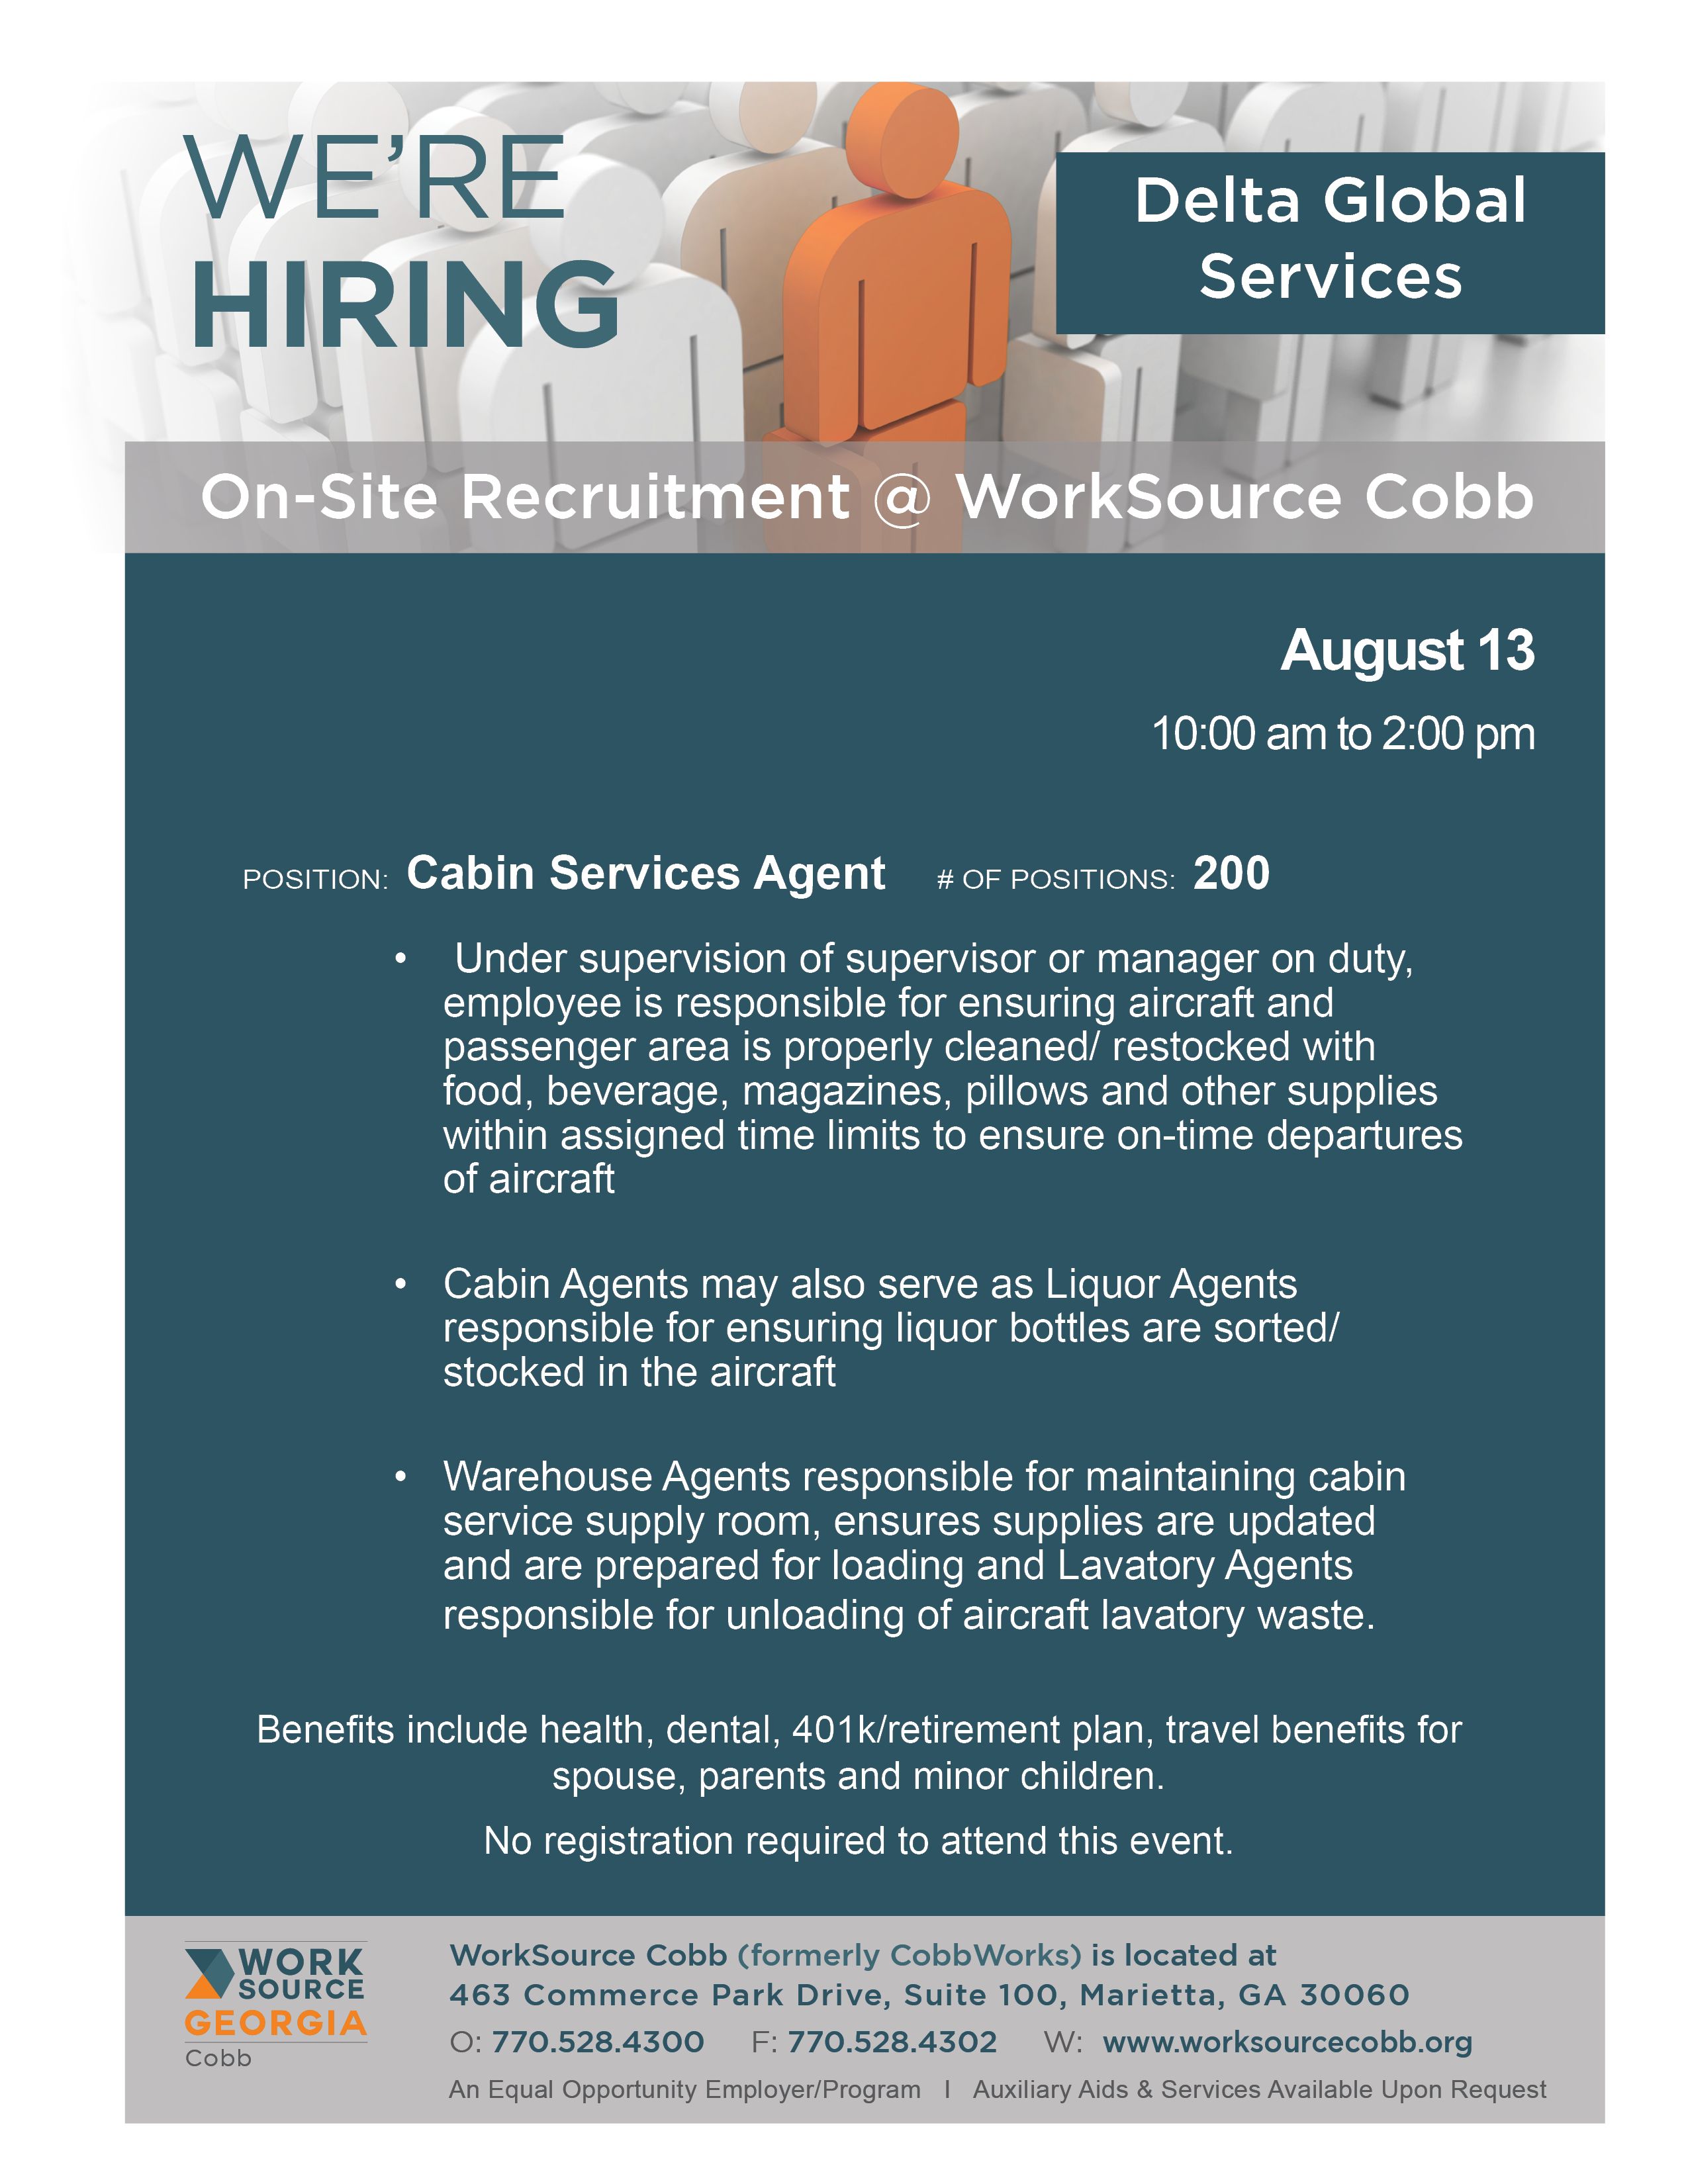 Delta Global Services Recruitment | Aug 13 2019 | CobbWorks